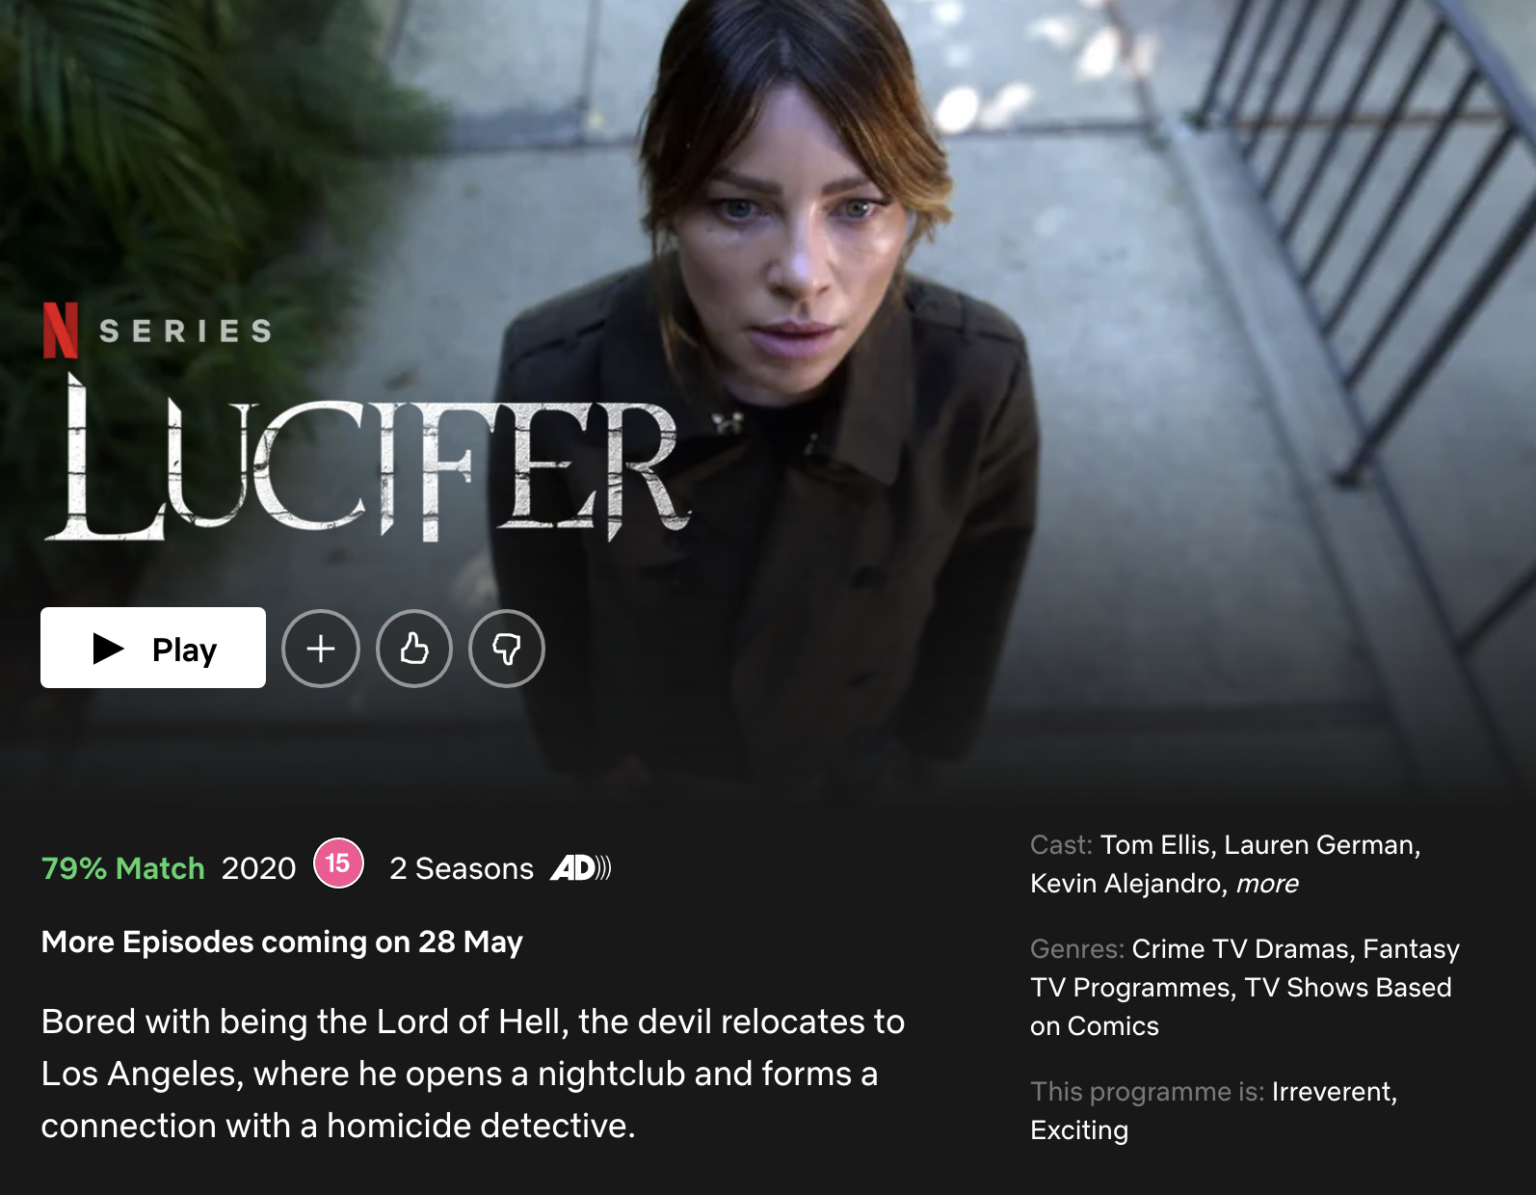 ‘Lucifer’ Season 5 Part 2: Premier Date, Plot & How to Watch